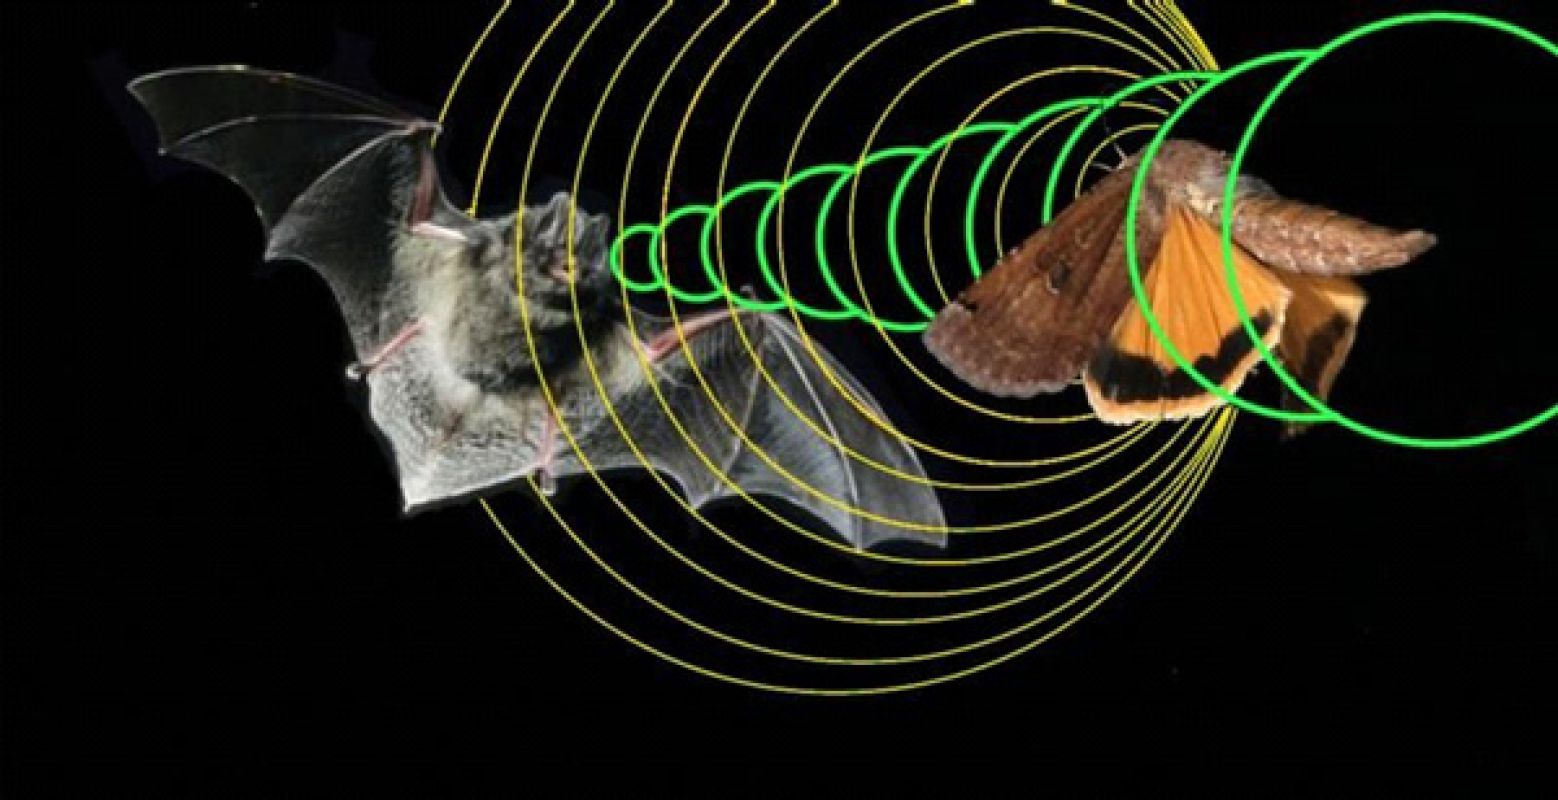 Ультразвуковые радары животных называют ультразвук. Эхолокация летучих мышей. Ультразвук в эхолокации. Летучая мышь Эхо. Эхолокация дельфинов и летучих мышей.